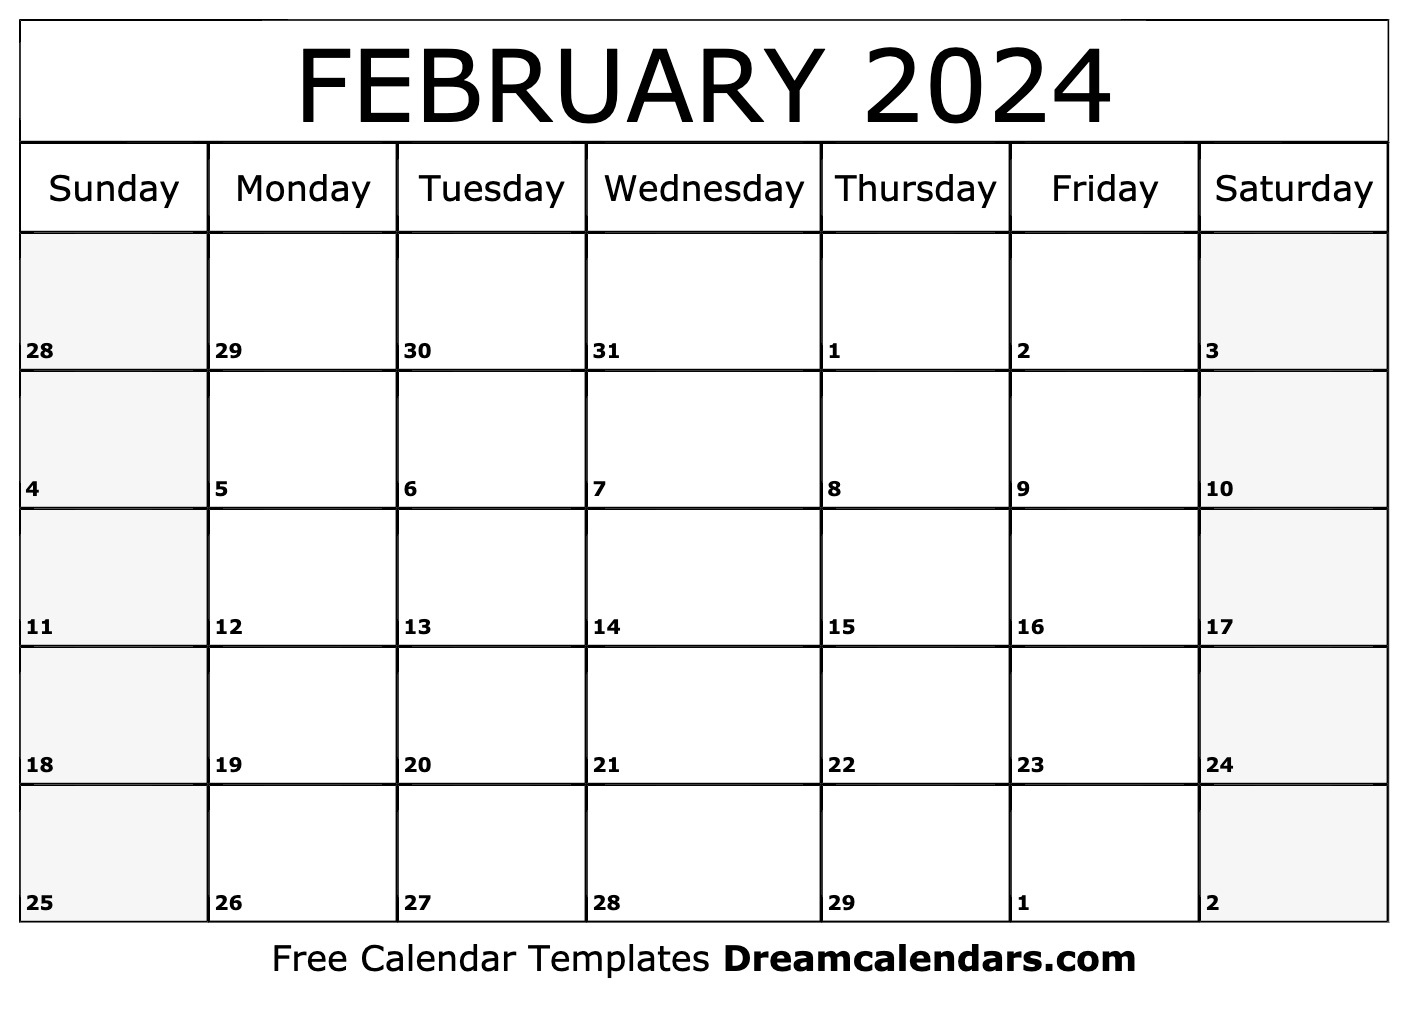 February 2024 Calendar Free Blank Printable With Holidays February - Free Printable 2024 Blank Calendar With Holidays